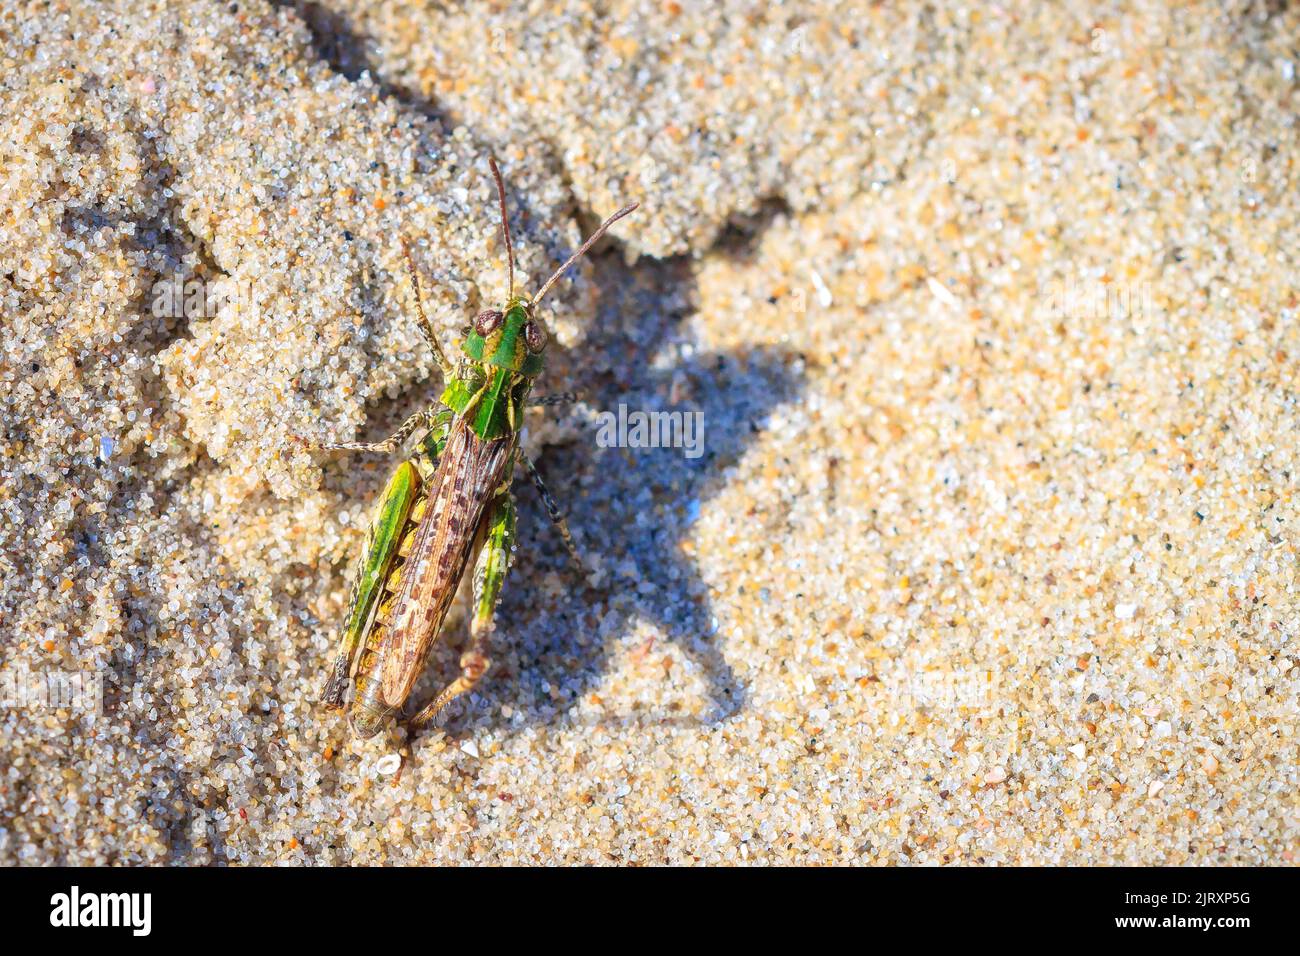 Closeup of a mottled grasshopper, Myrmeleotettix maculatus, resting on sand Stock Photo